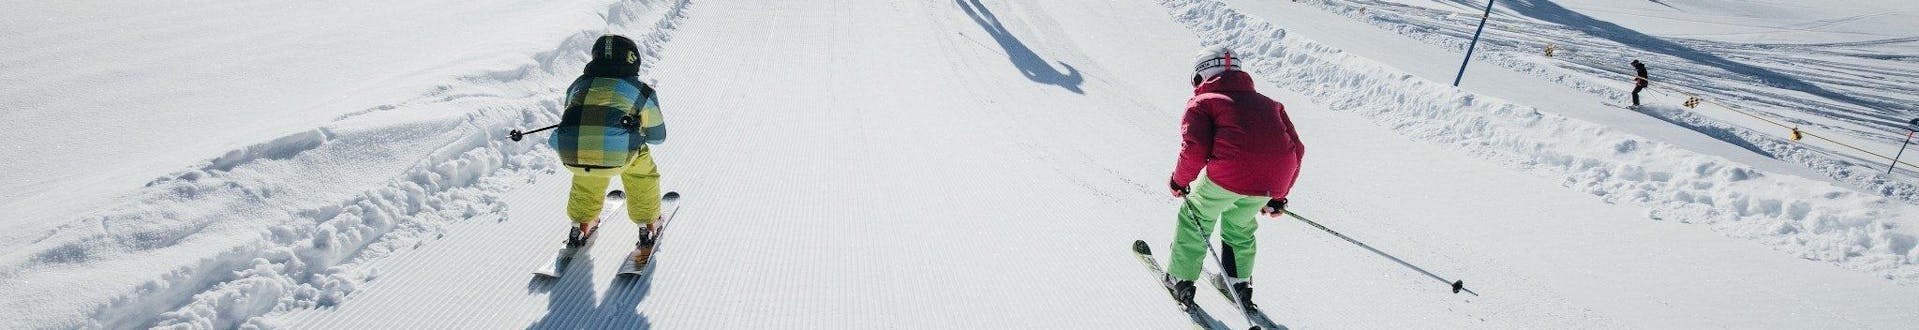 Adults and kids skiing in Turracher ski resort.